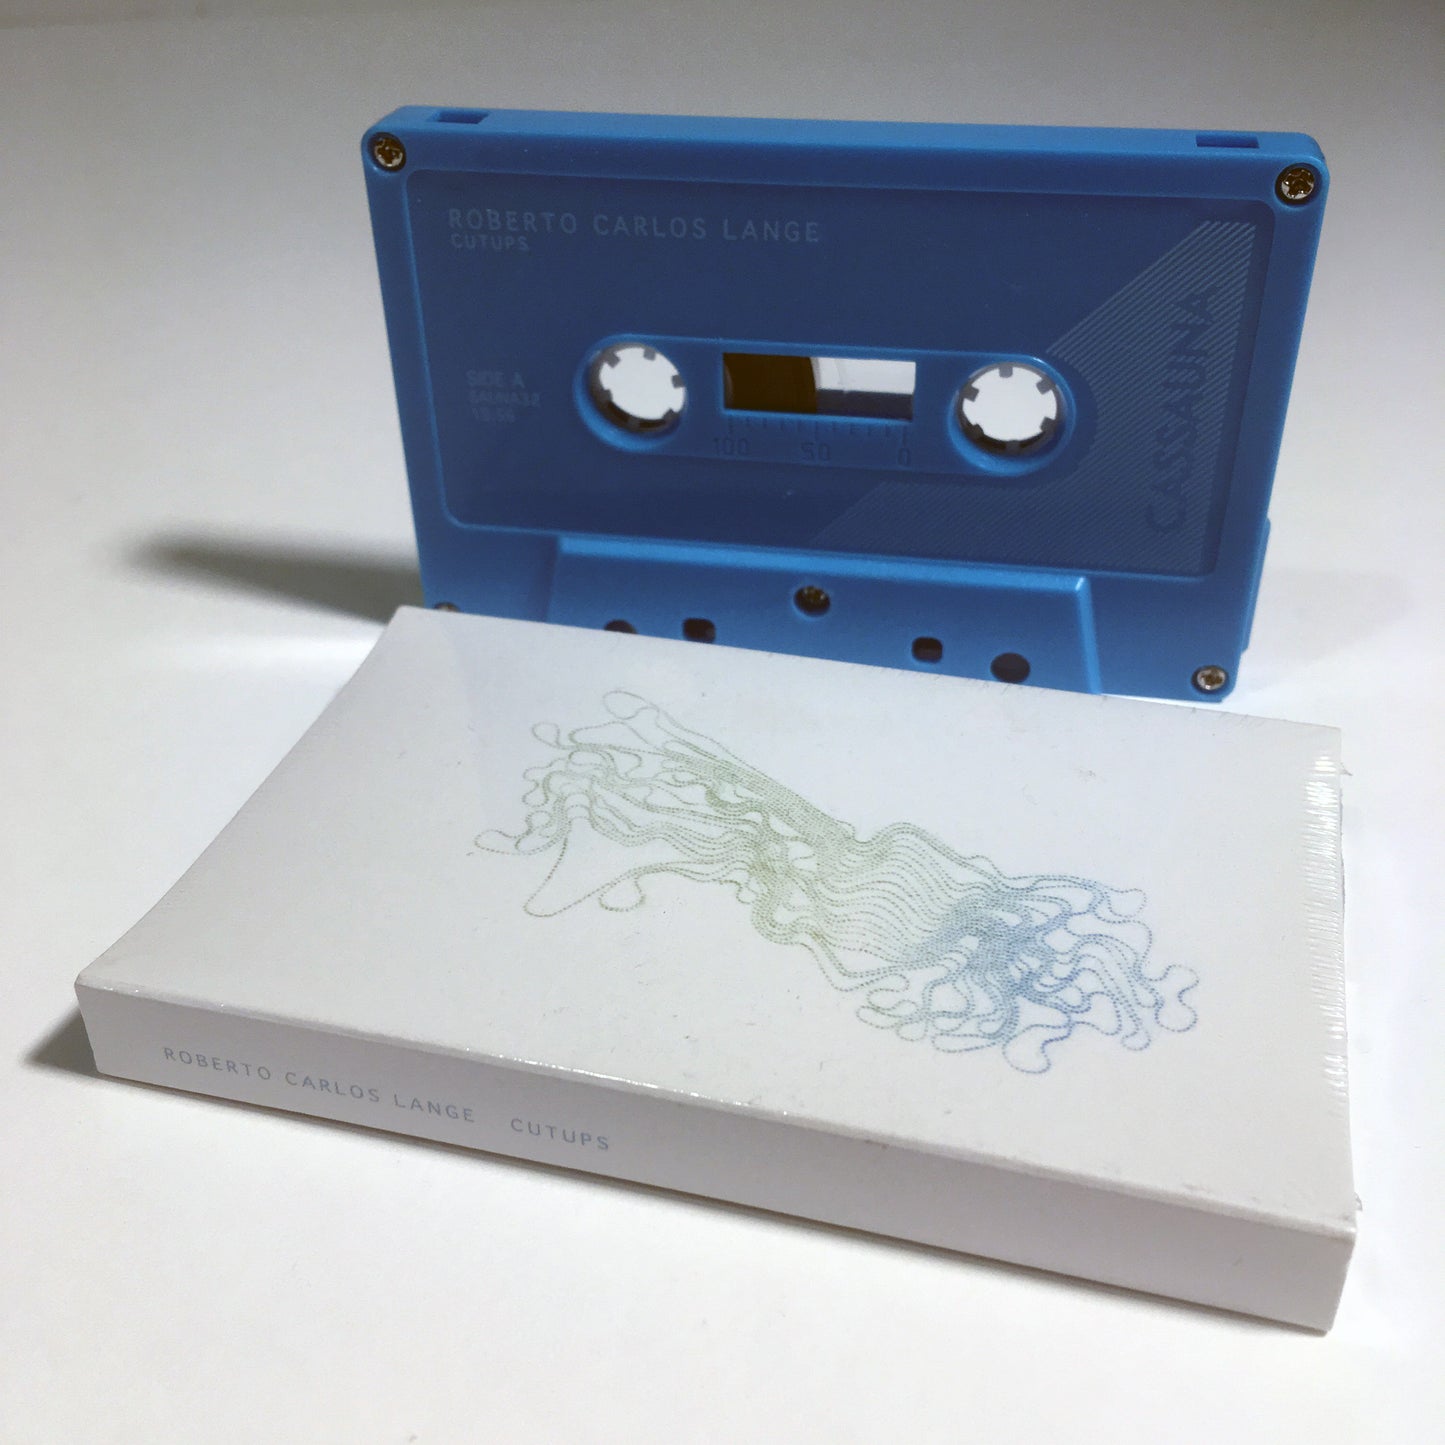 Roberto Carlos Lange - Cutups - Cassette